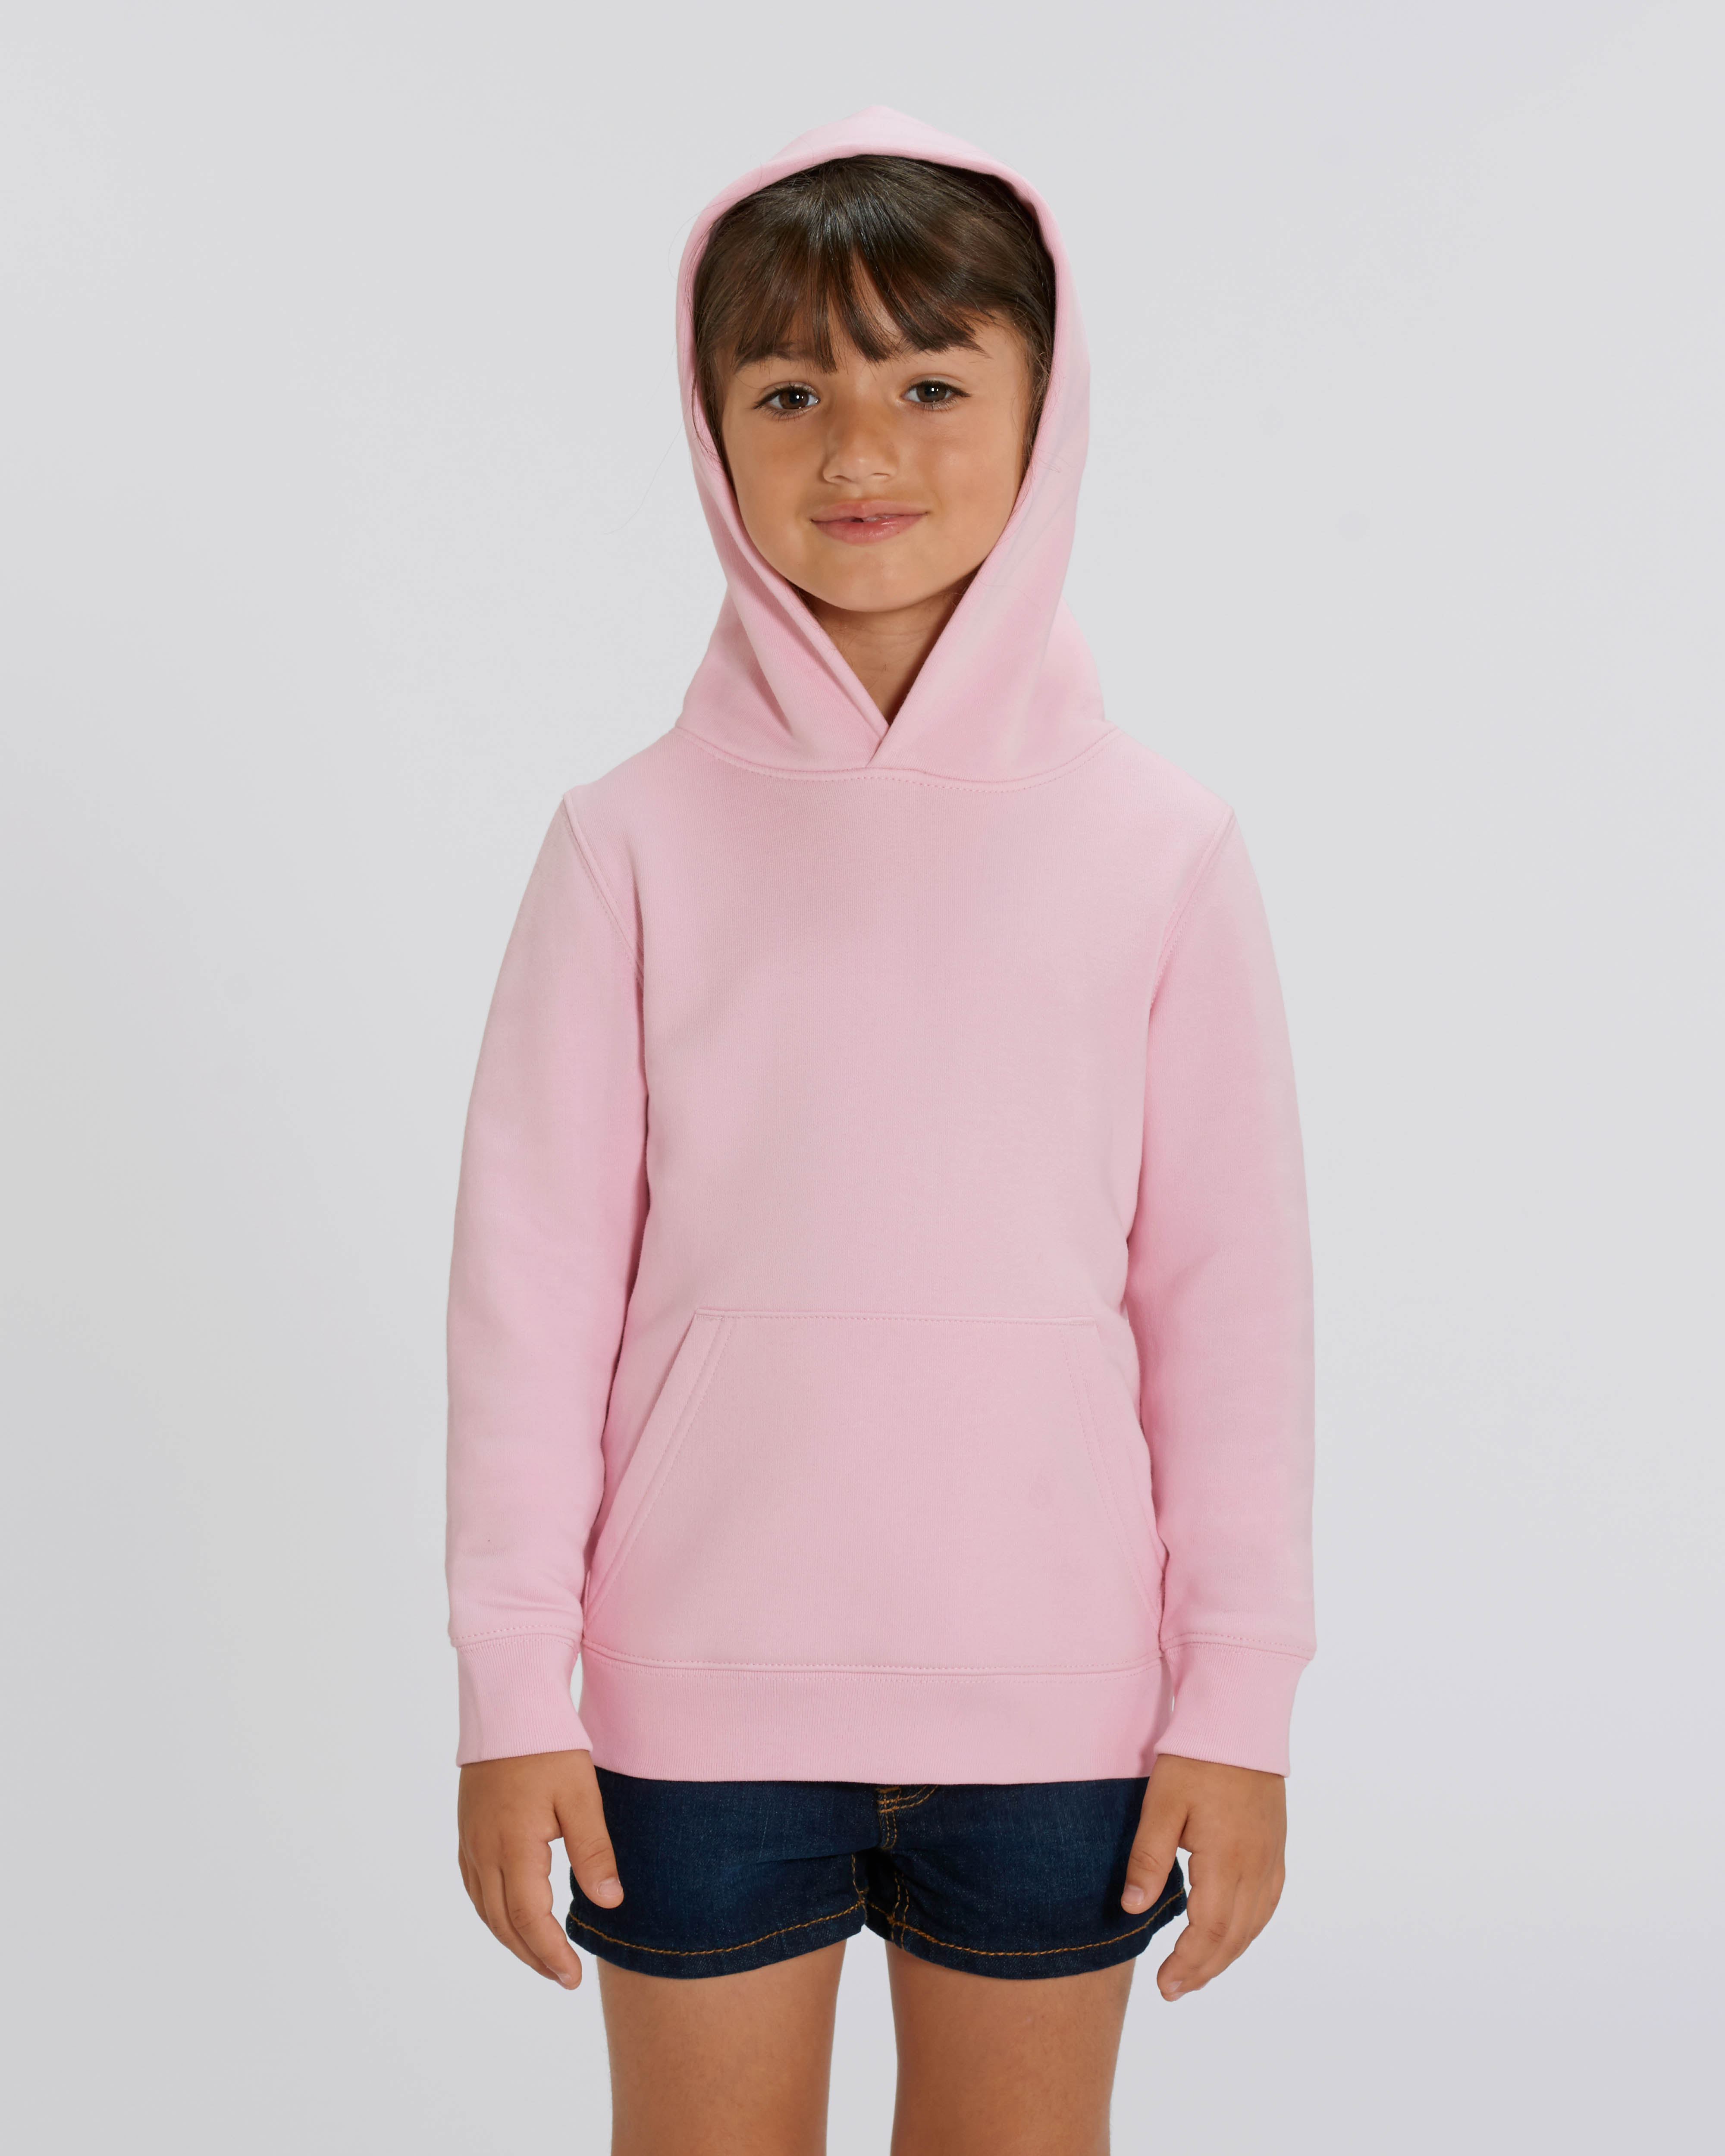 Hooded Sweatshirt Kids "Mini Cruiser"